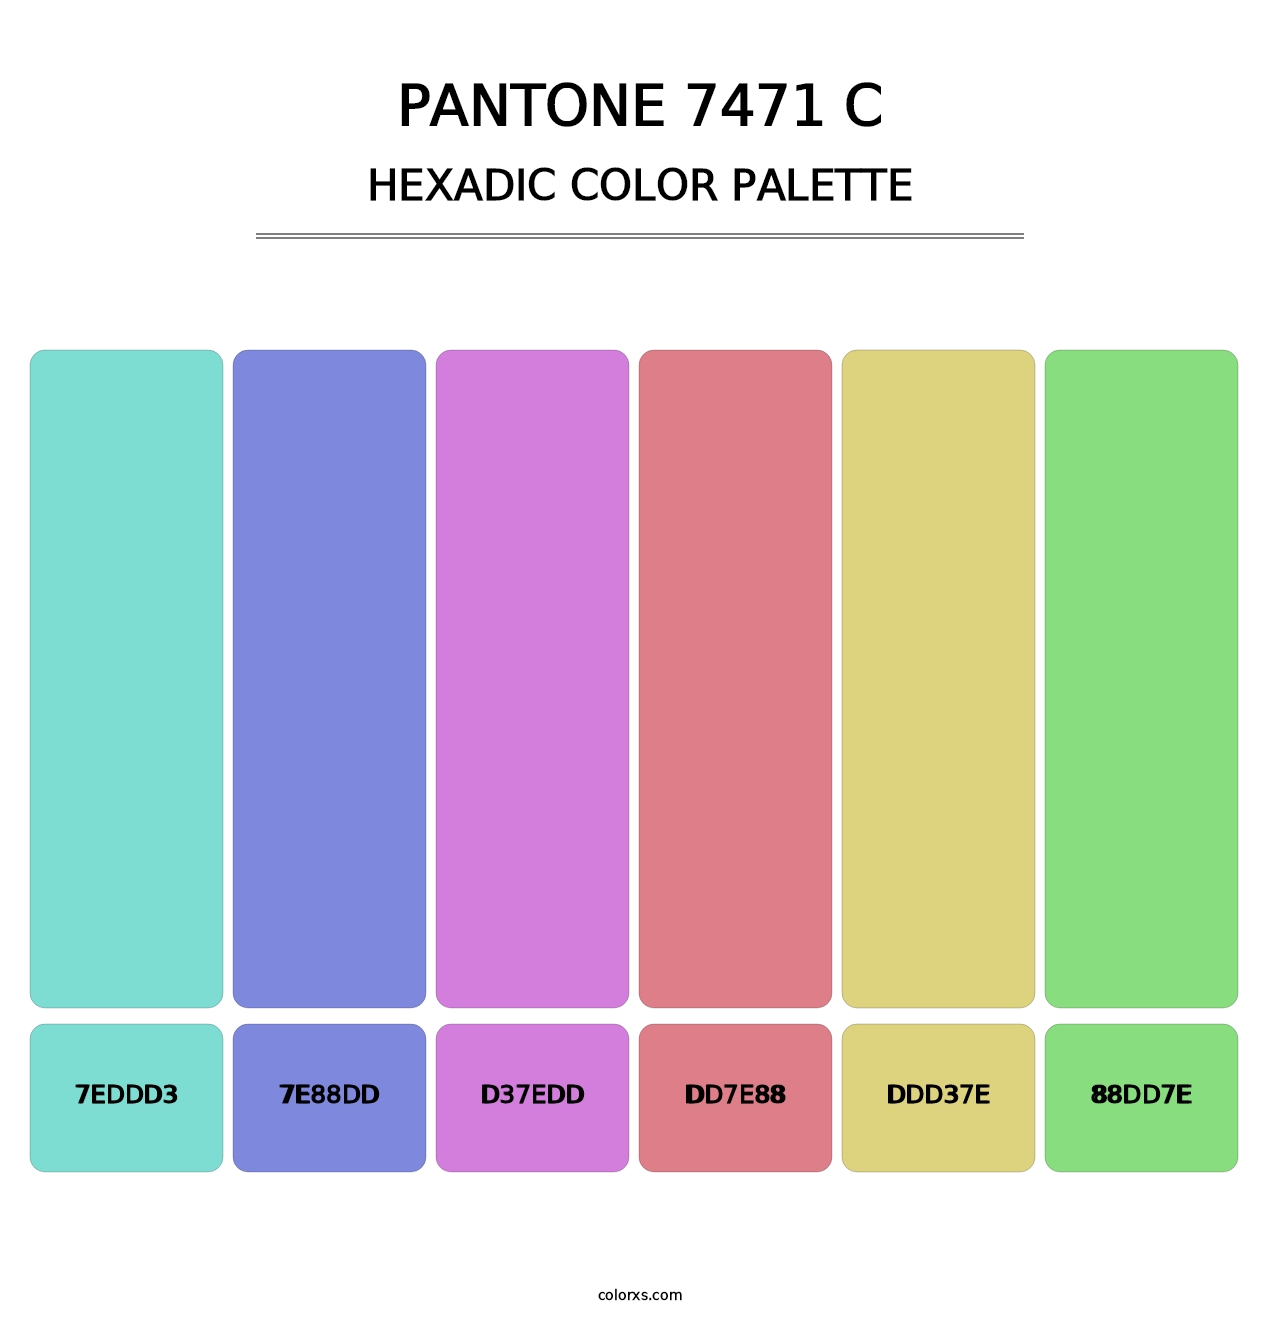 PANTONE 7471 C - Hexadic Color Palette